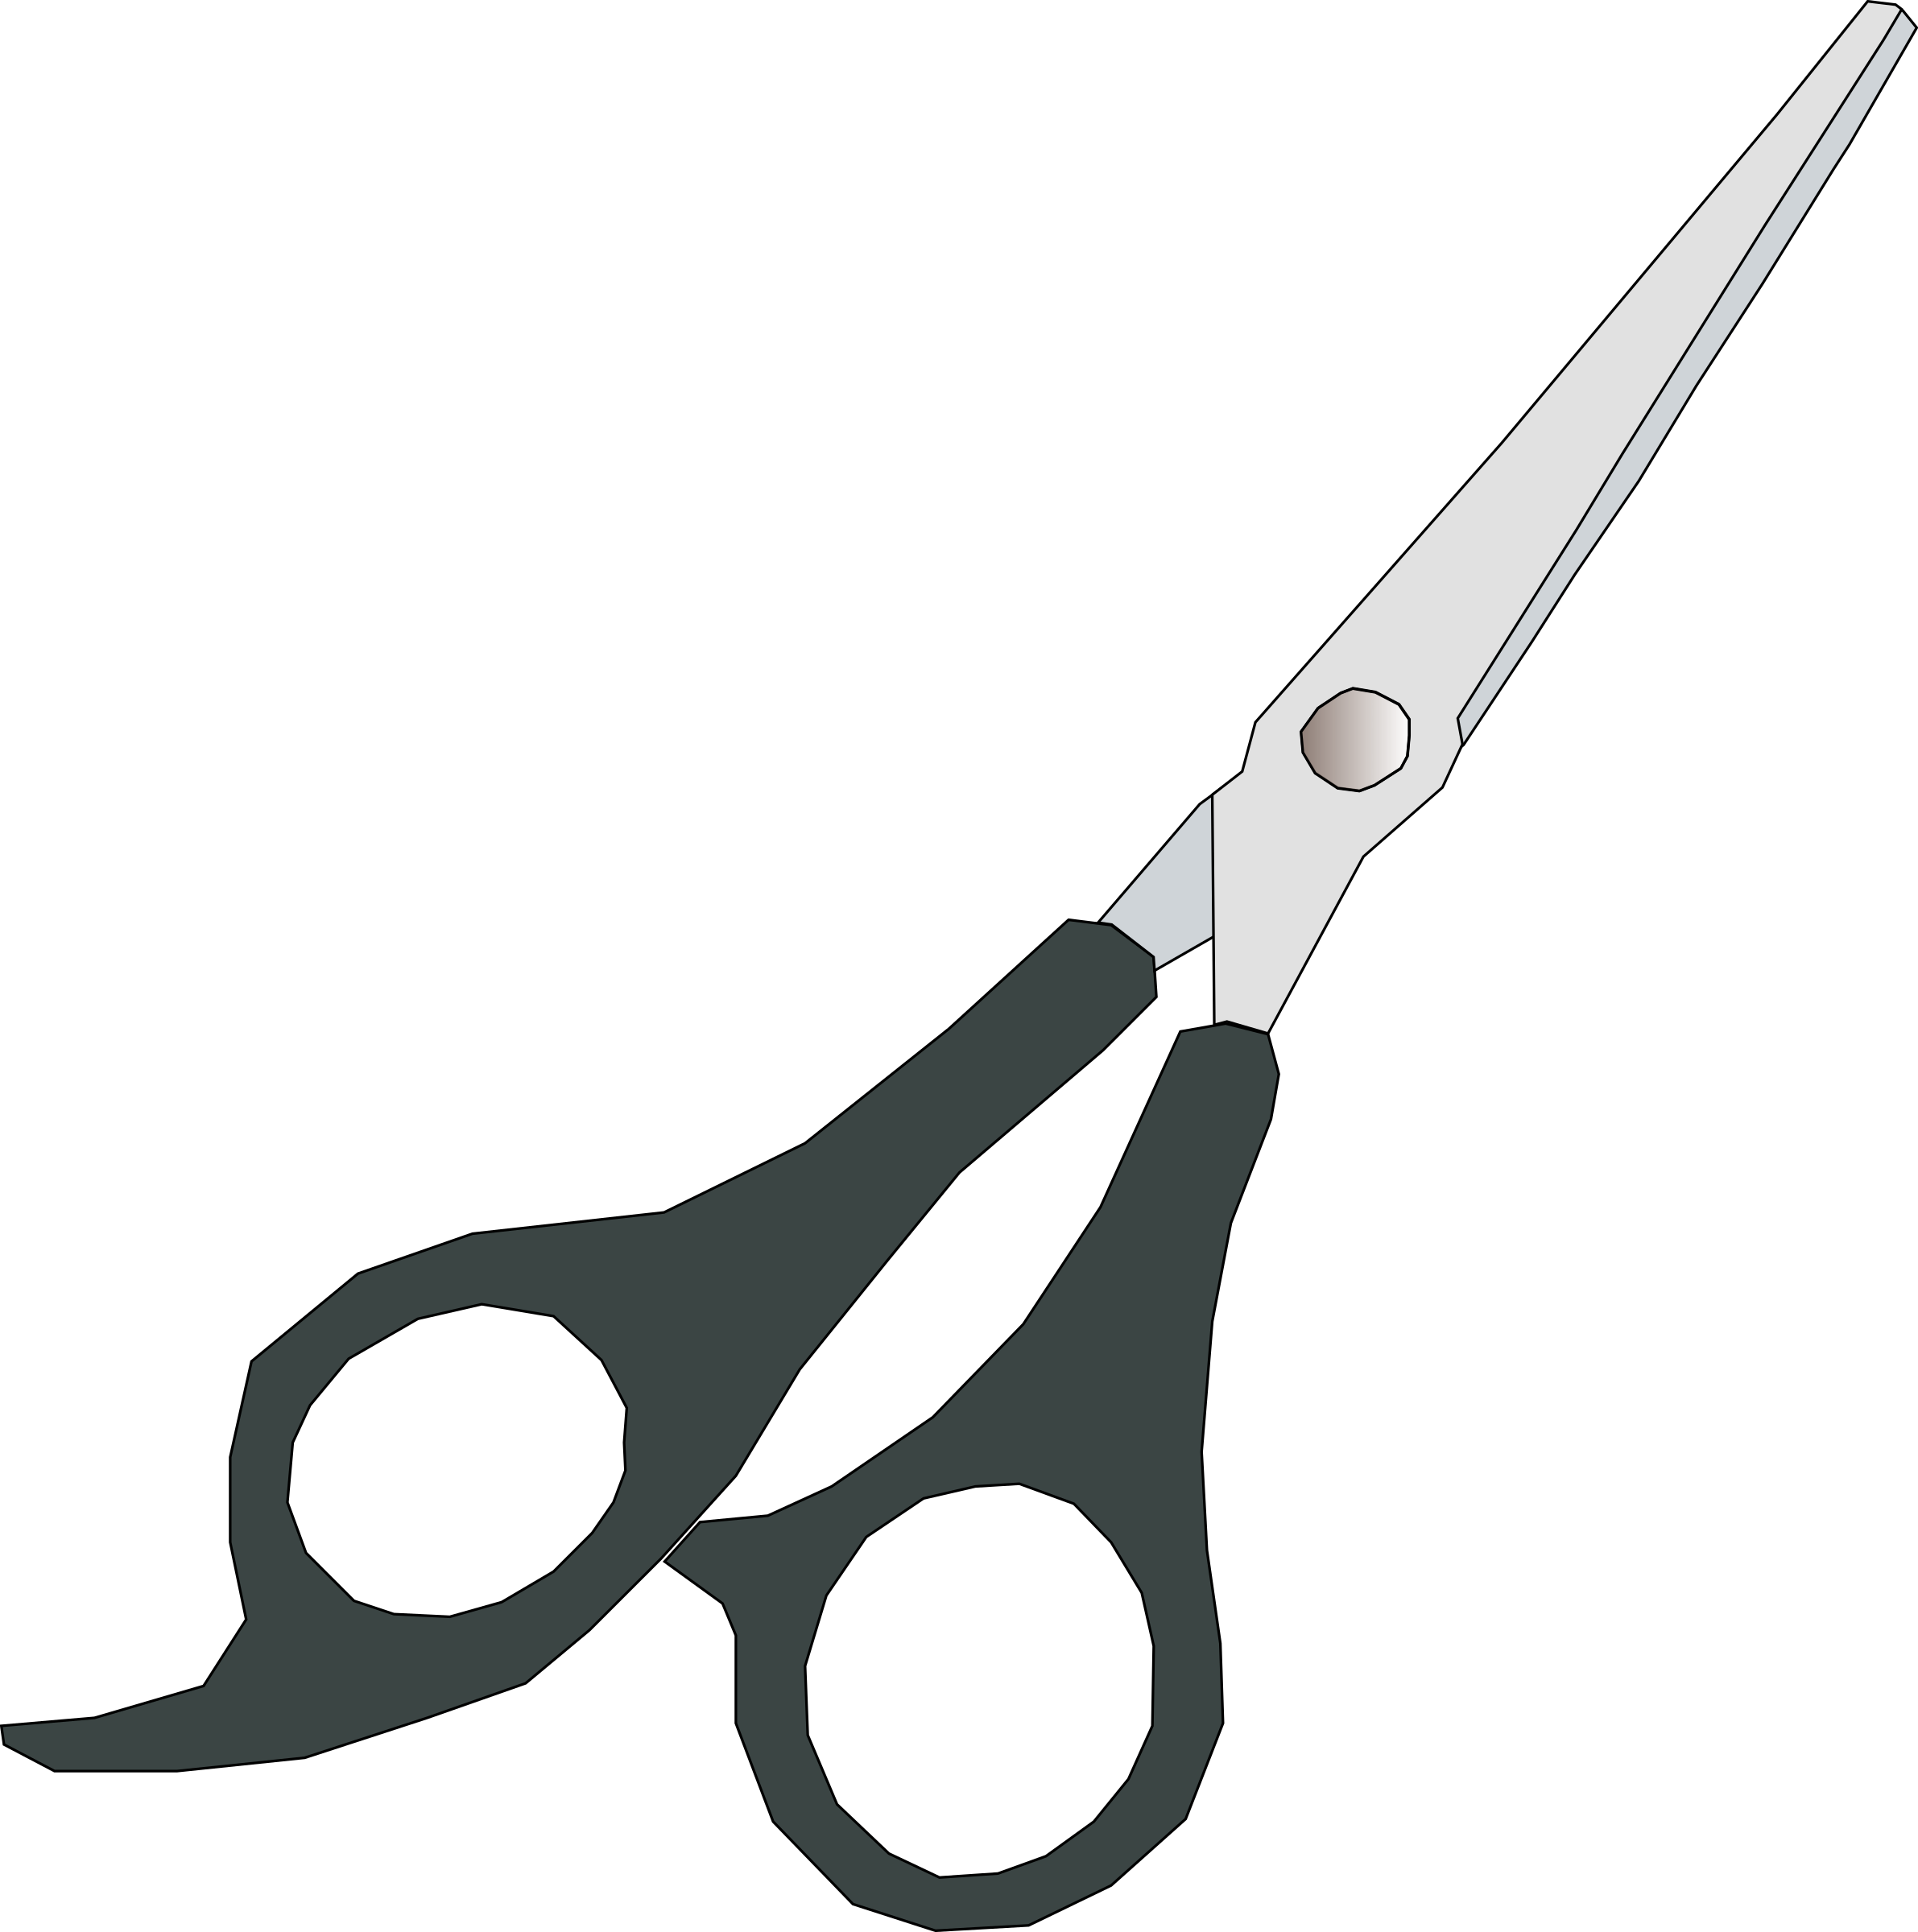 shears clipart use